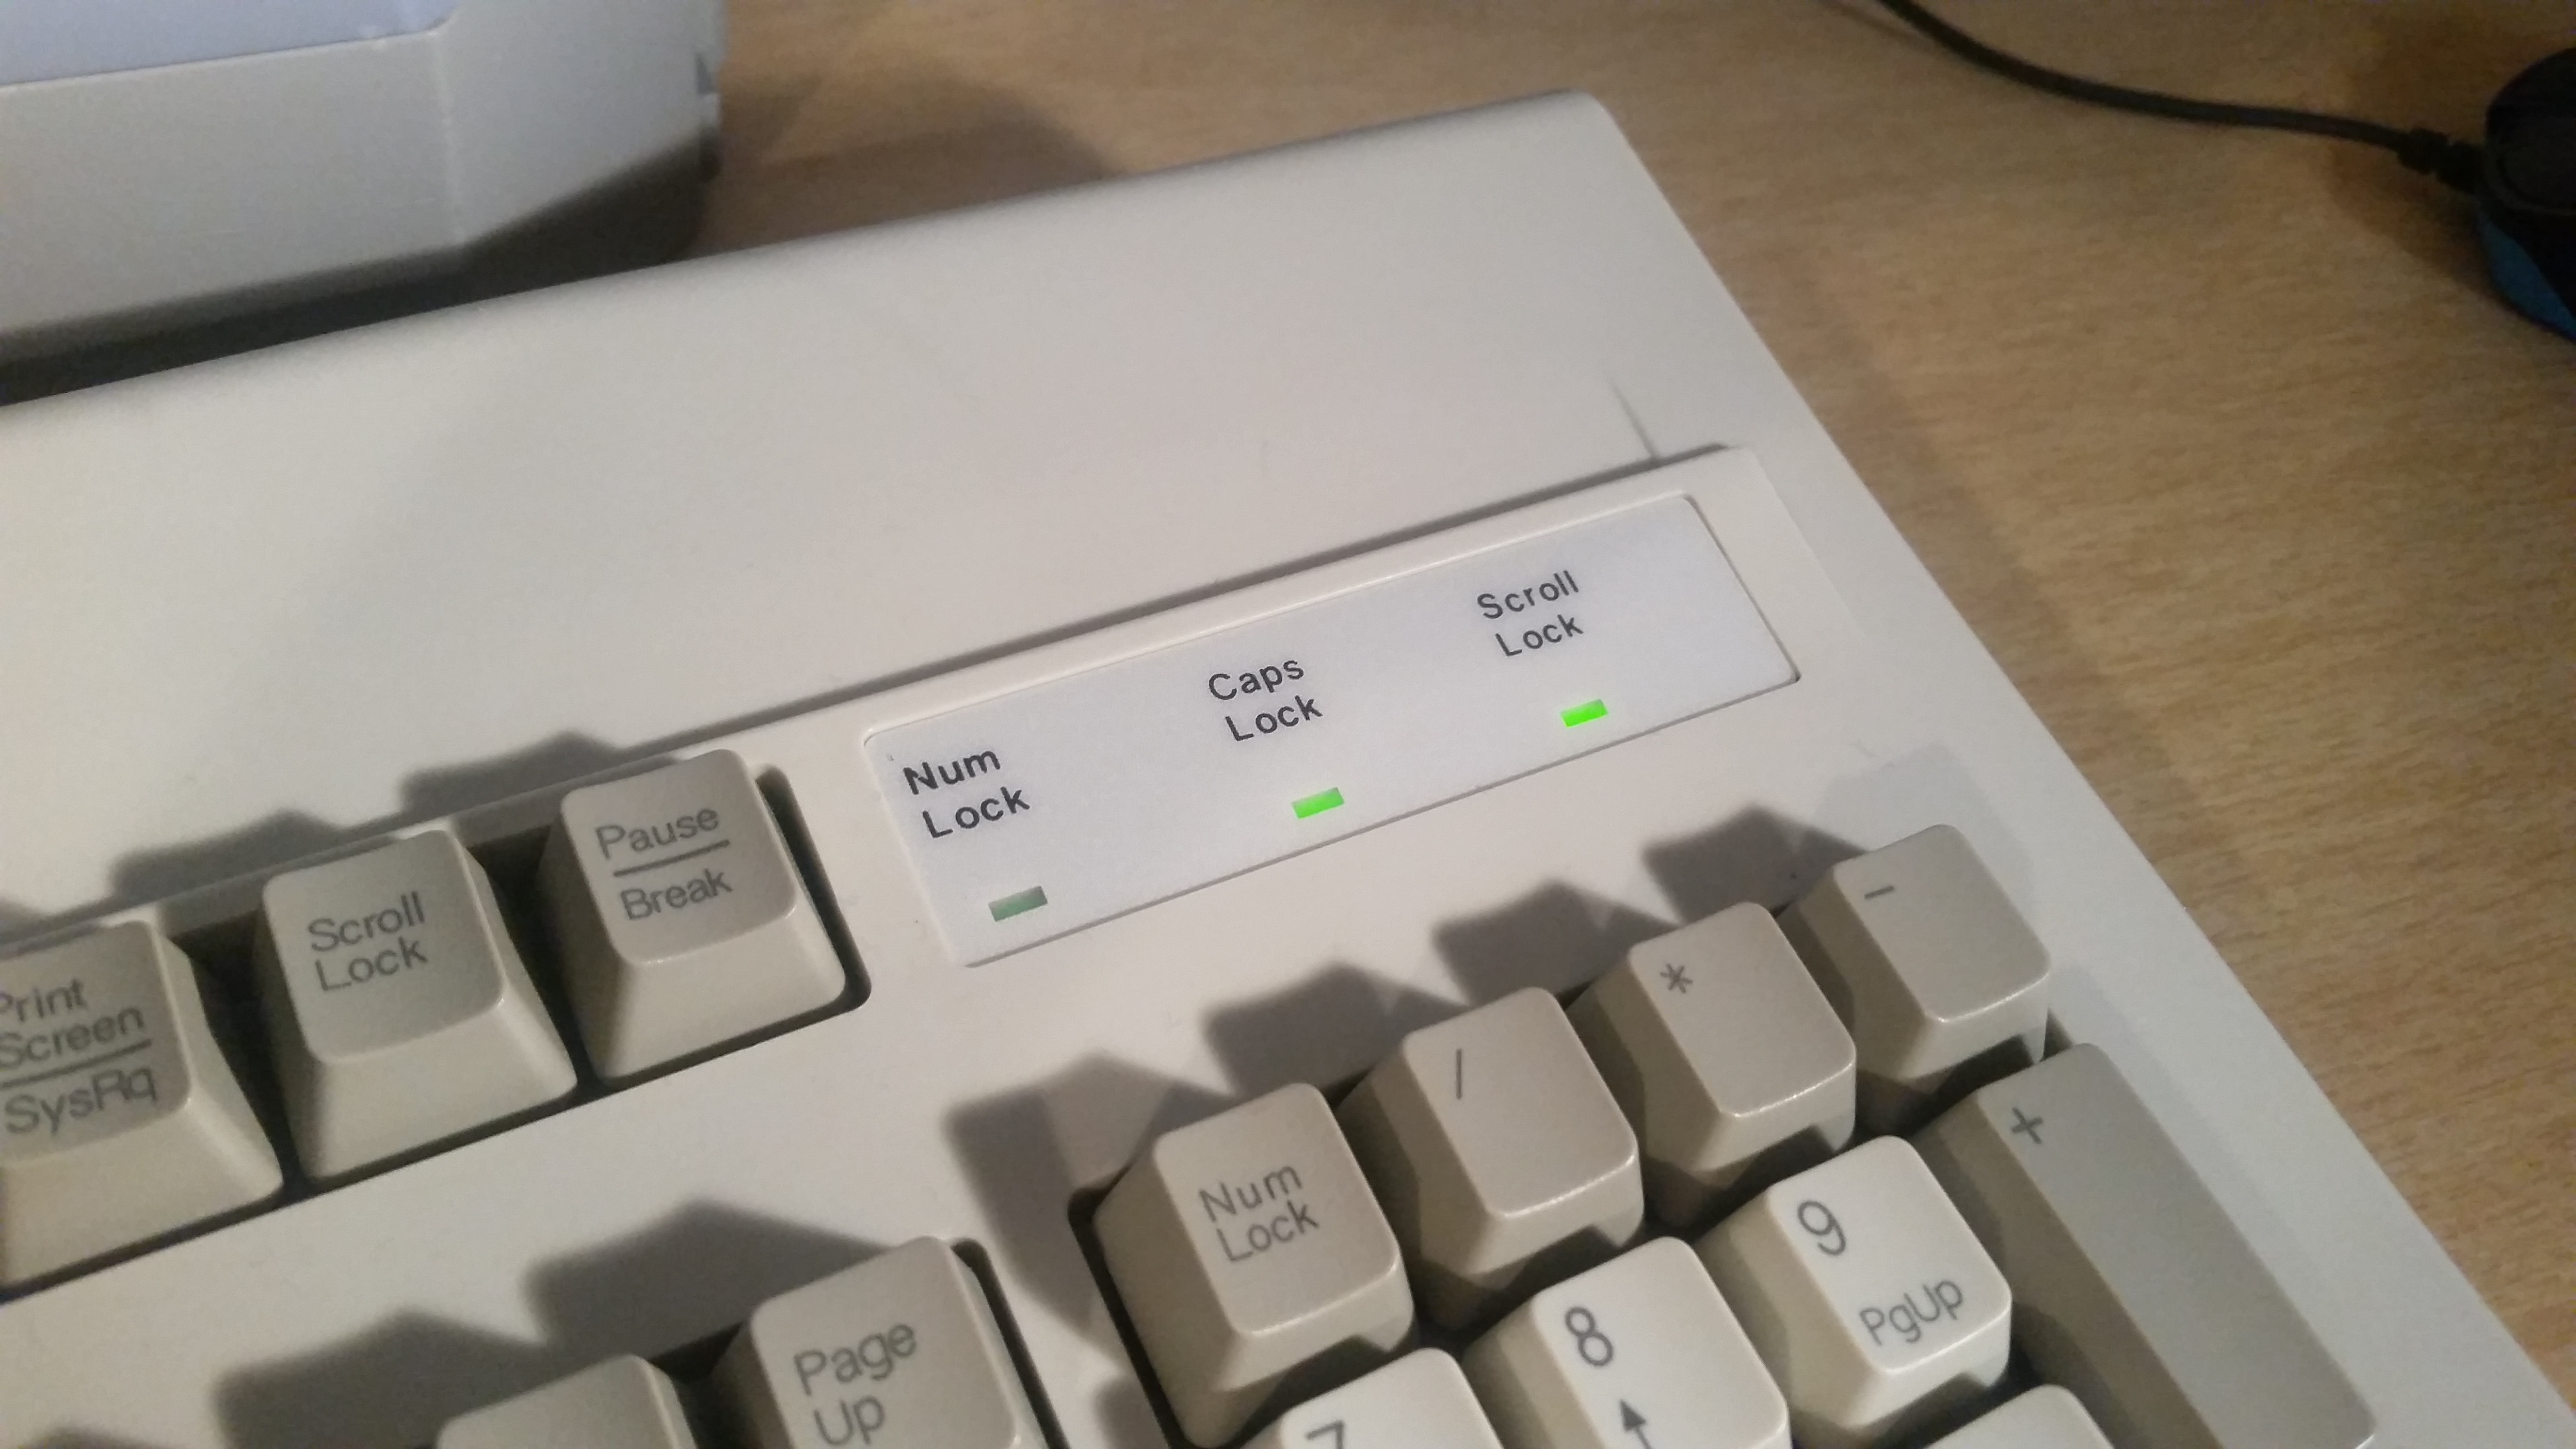 Клавиши цифры не работают. Caps Lock светодиод на клавиатуре. Блок клавиатура с цифрами справа. Не работают цифры на клавиатуре справа. Вздулась клавиатура с правой стороны.